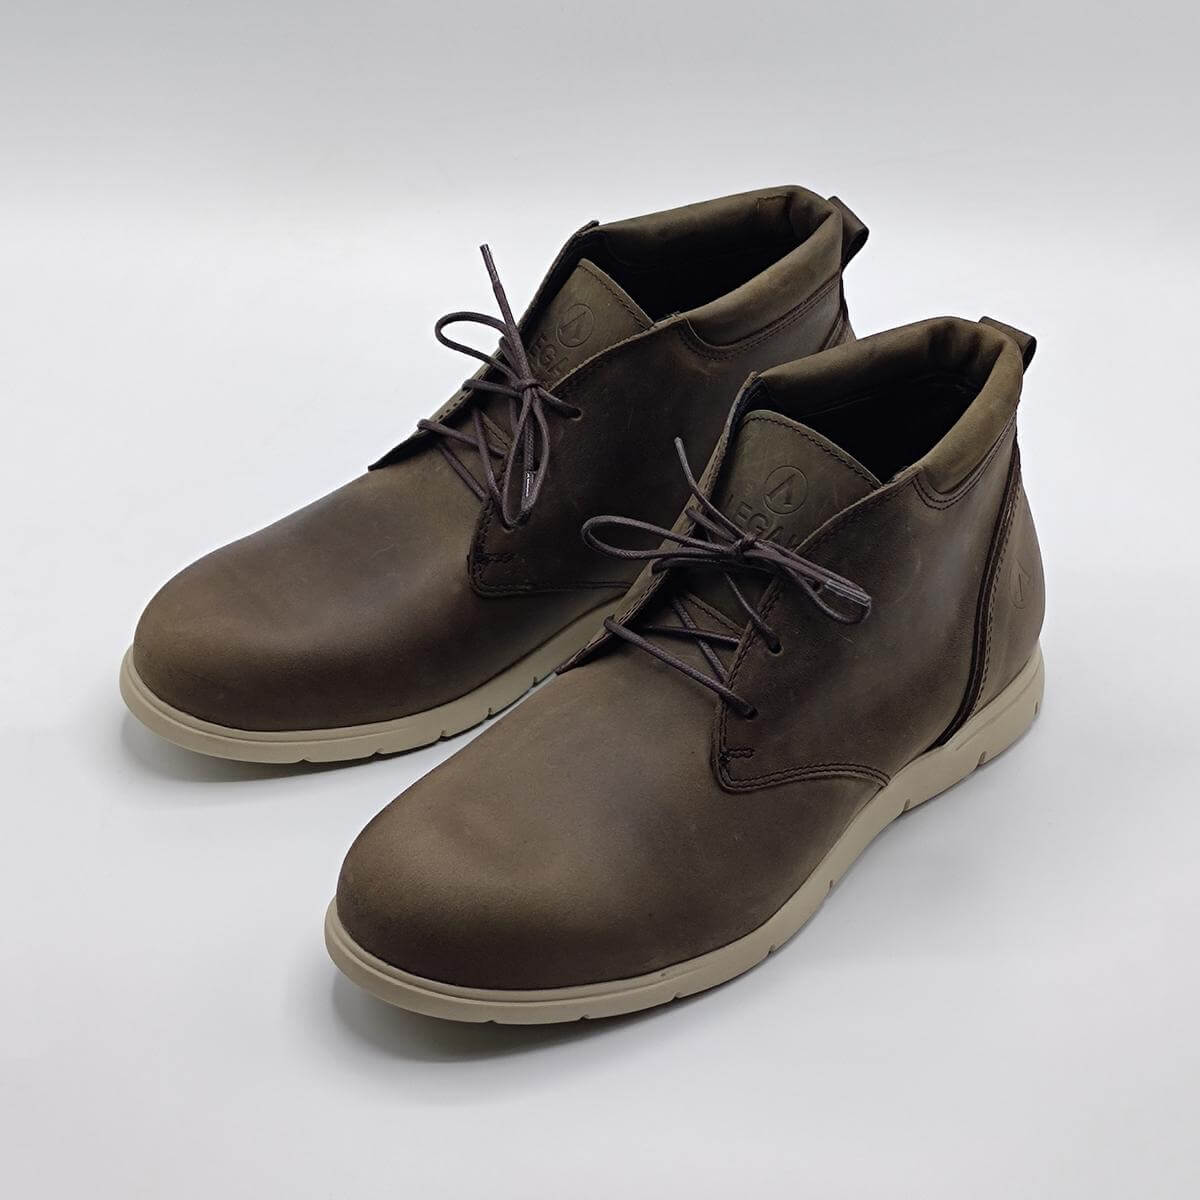 mens-chukka-boots gray color